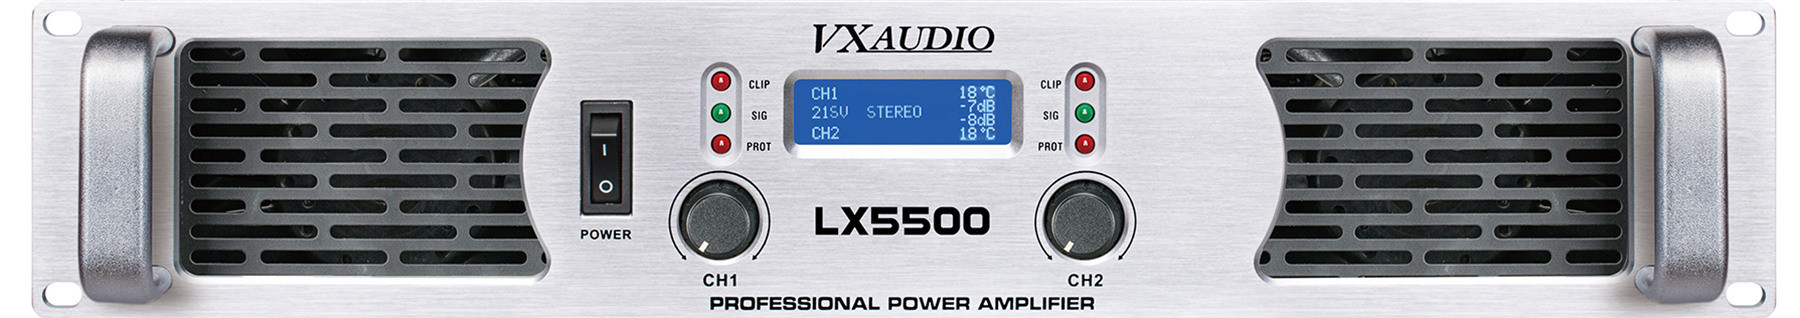 LCD Display Power Amplifier 250W-1000W (LX 5500)